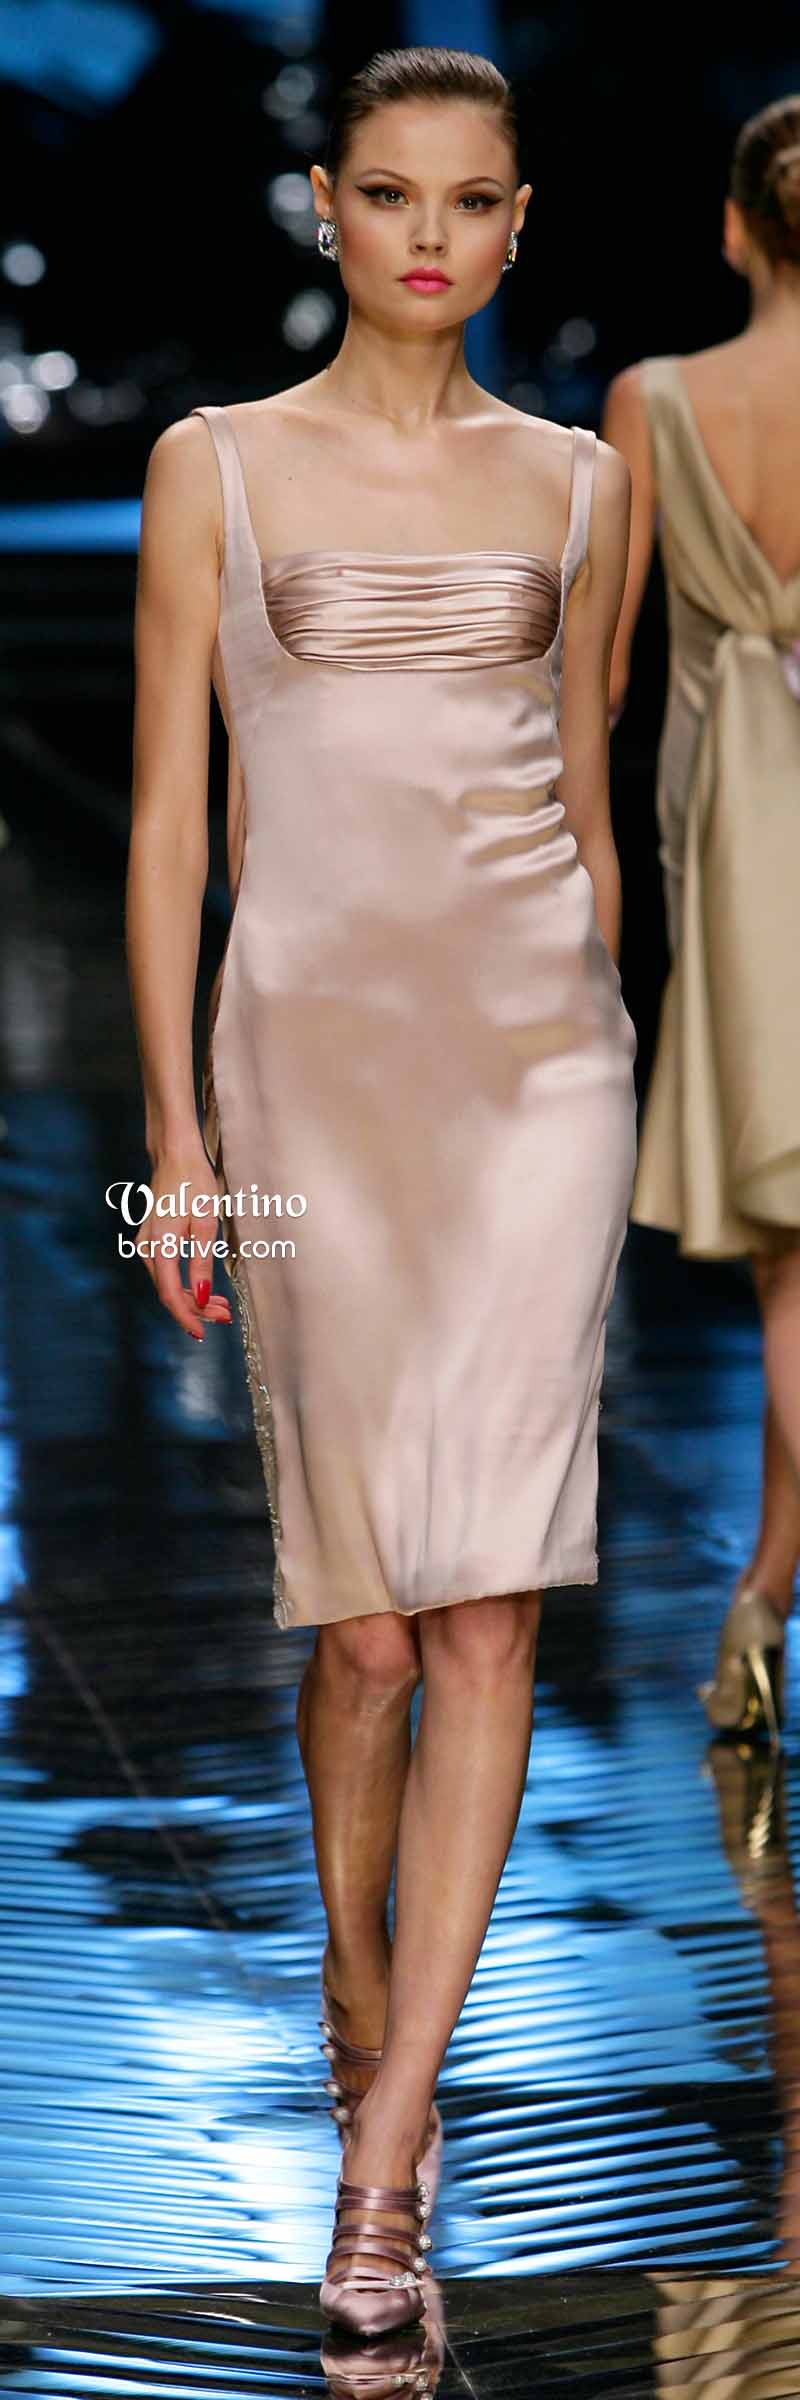 Valentino Silky Cocktail Dress